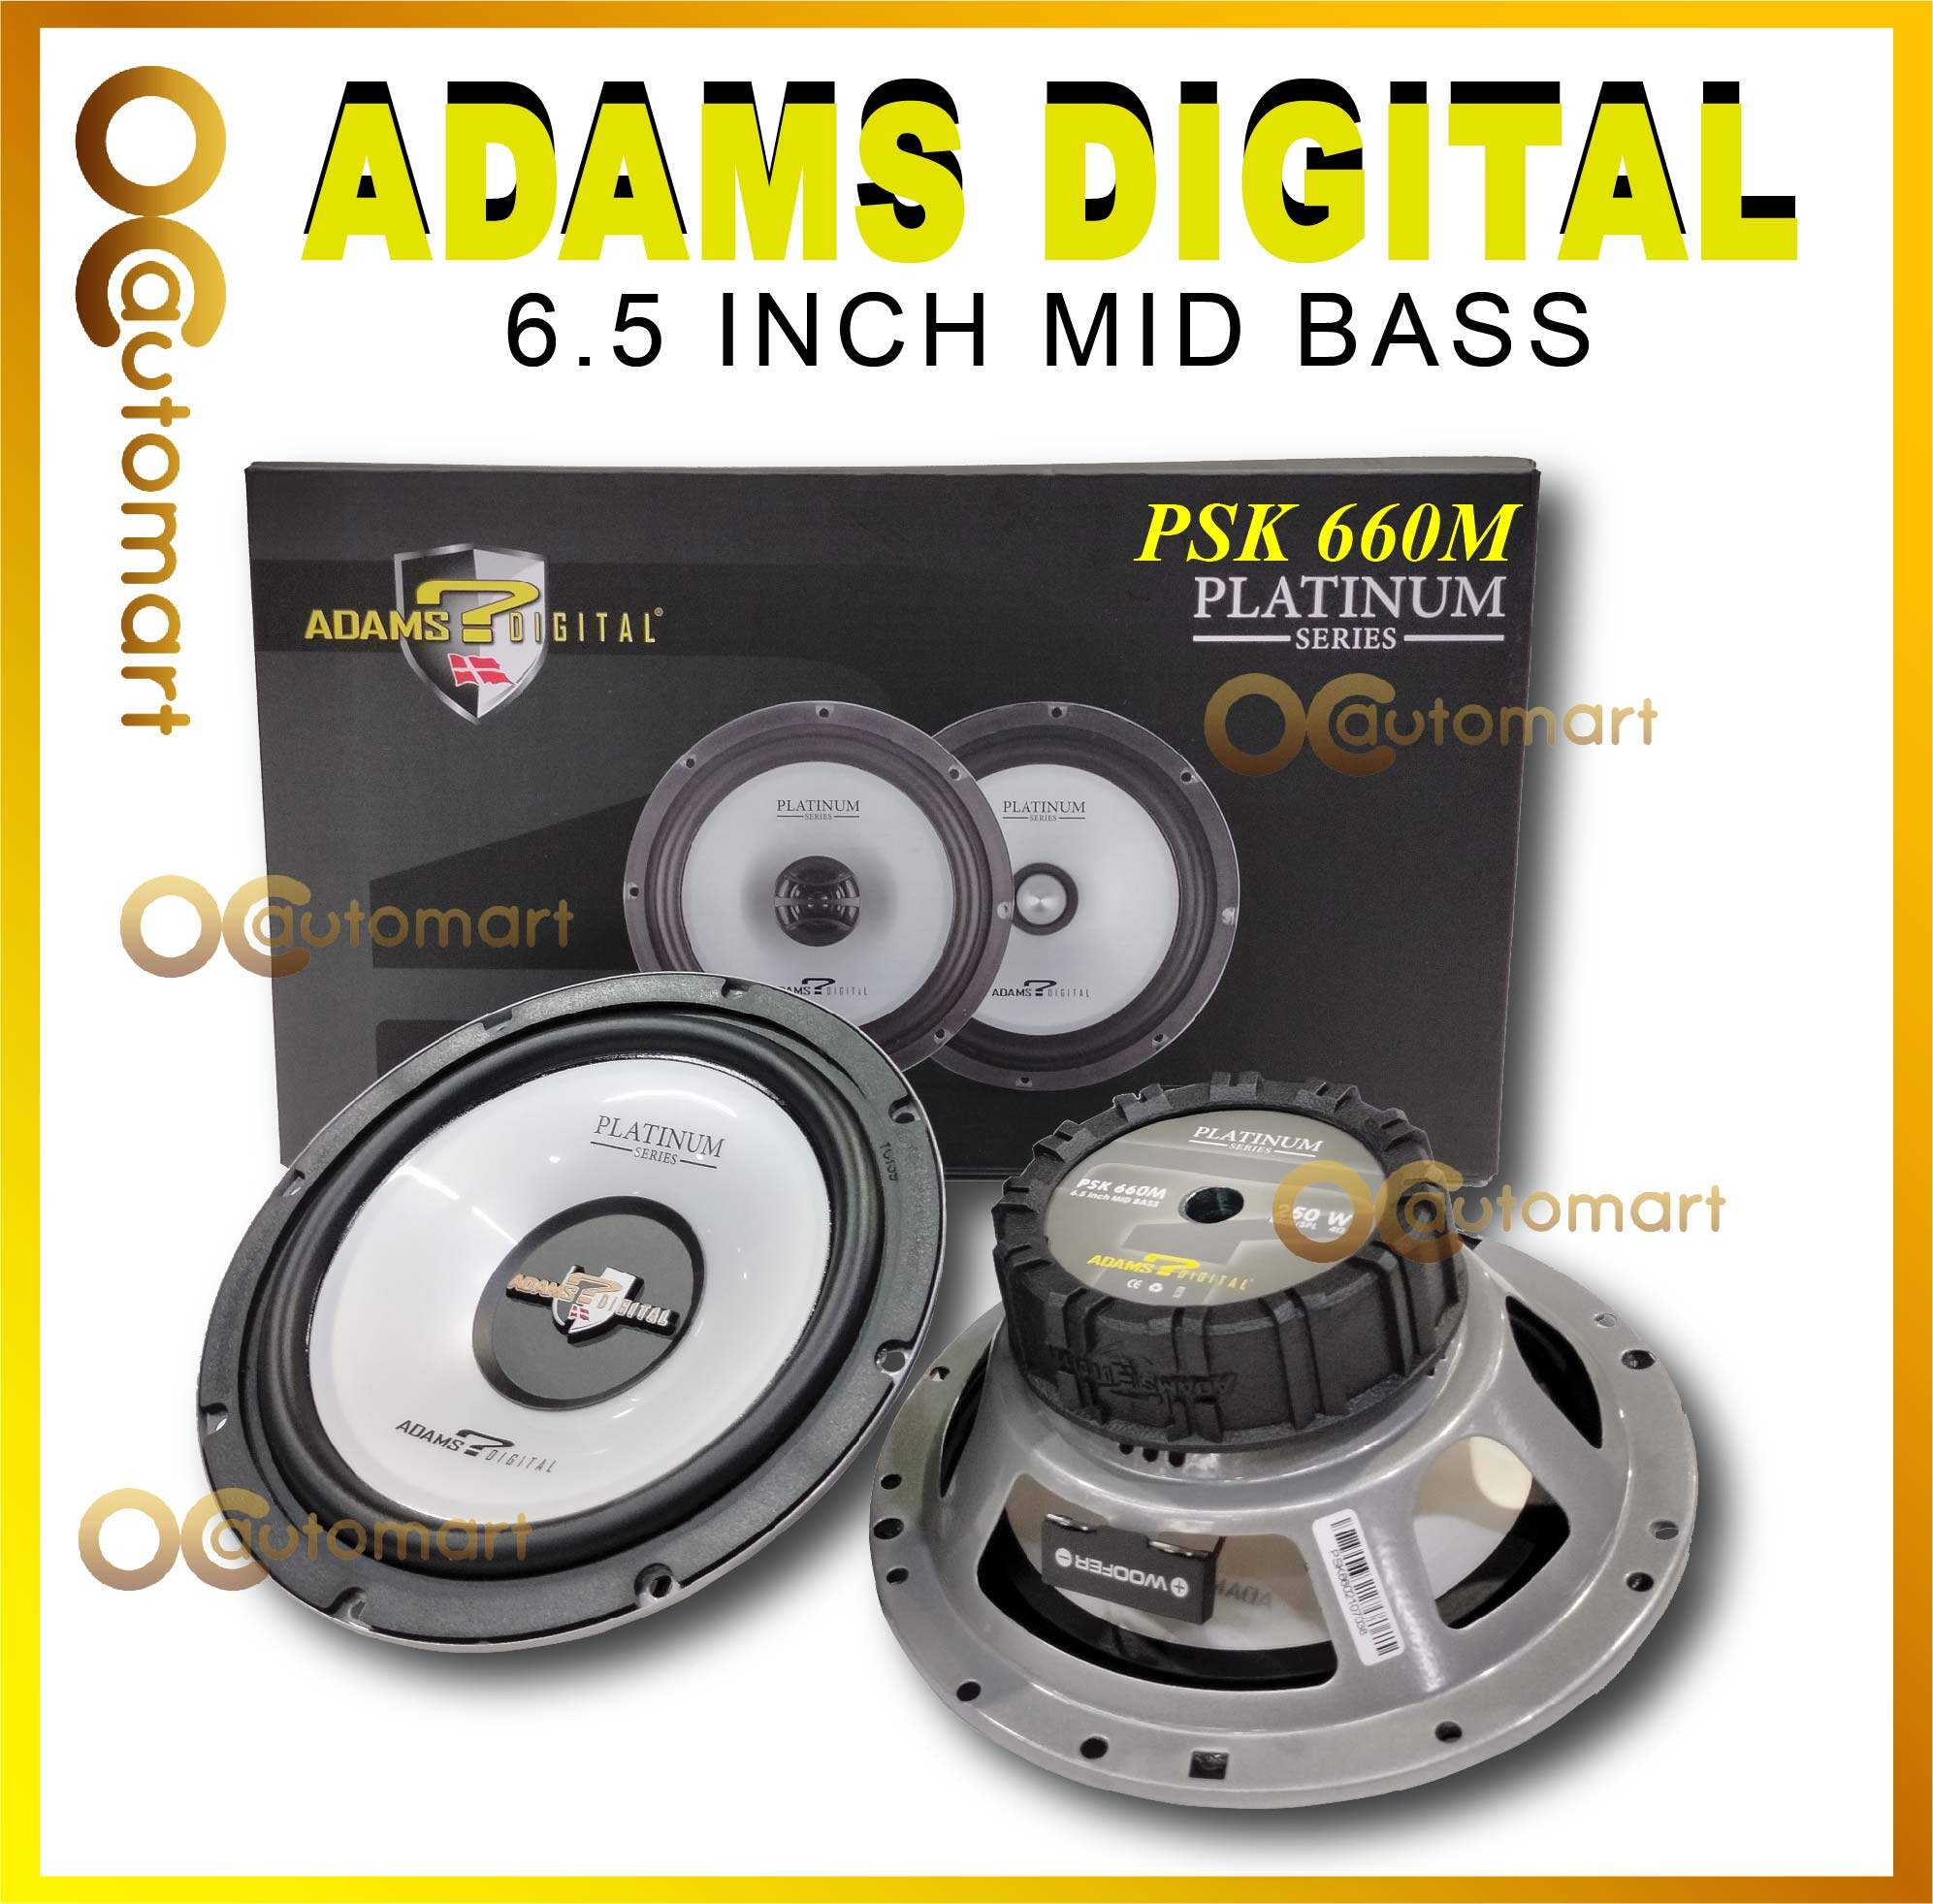 Adams Digital Platinum Series 6.5 inch Mid Bass 250 Watts PSK 660M Car Speaker Mid Range Spiker Kereta 6.5"